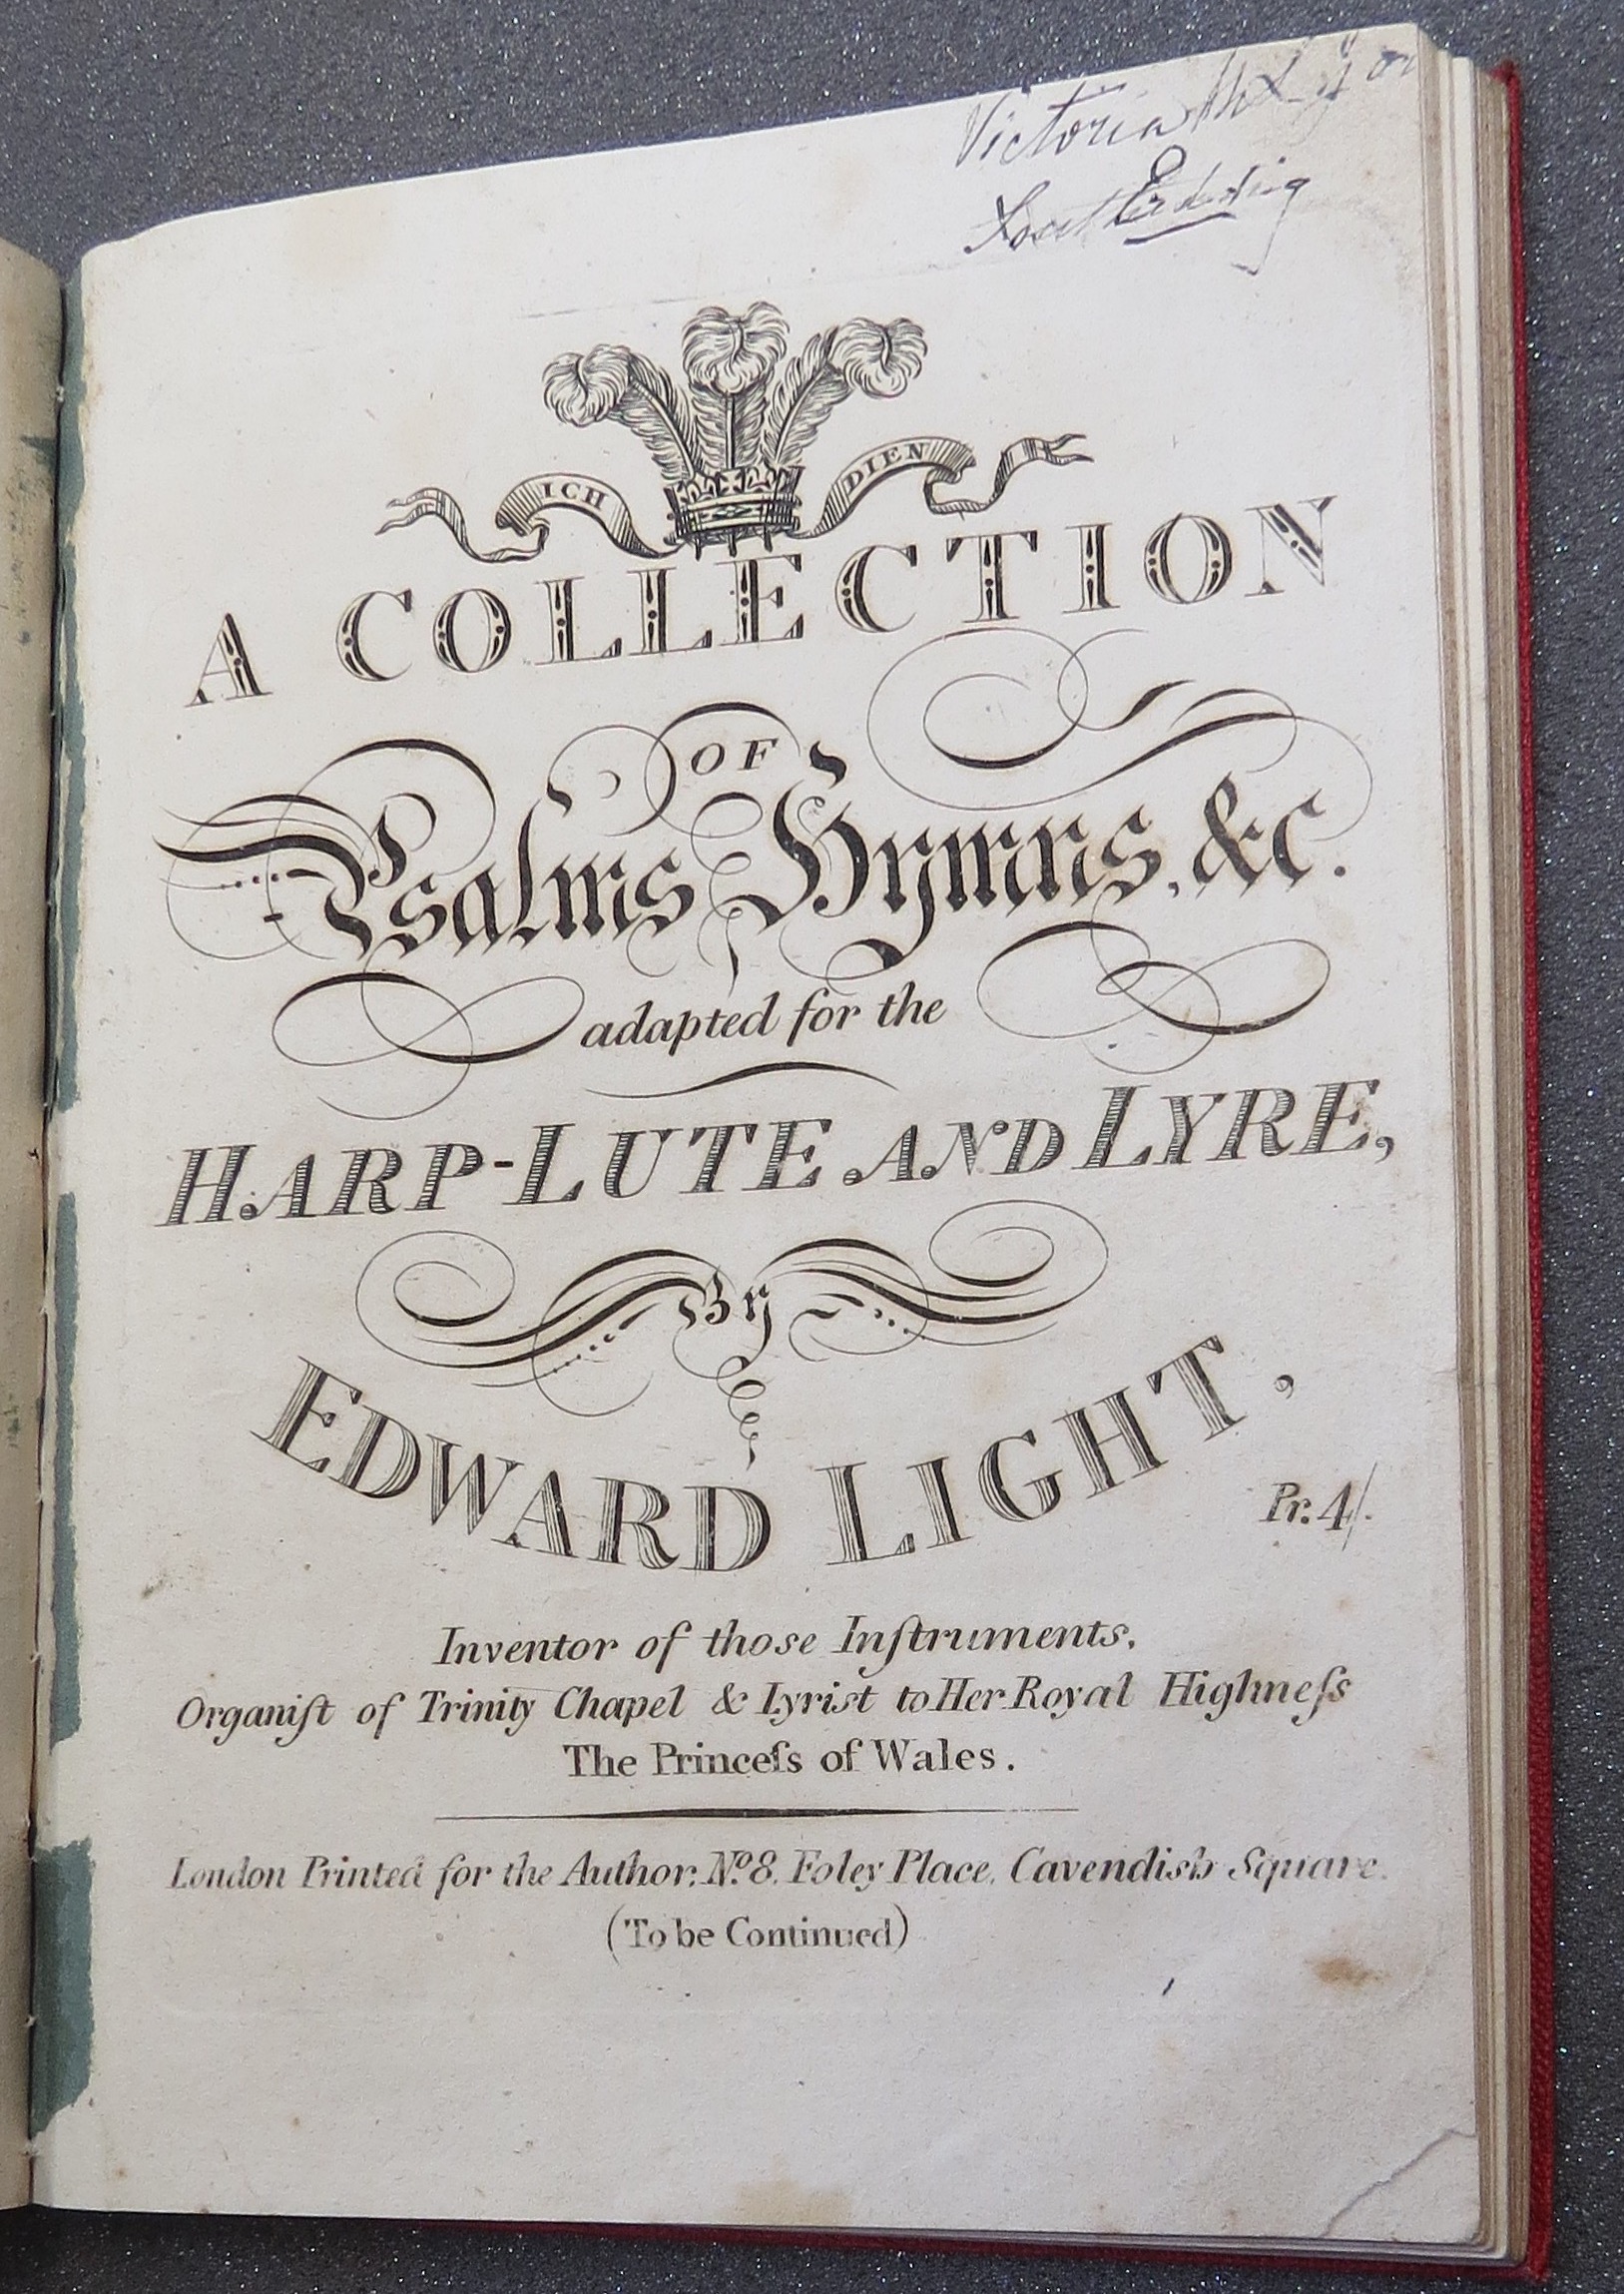 Edward Light, A Collection of Psalms, Hymns &c